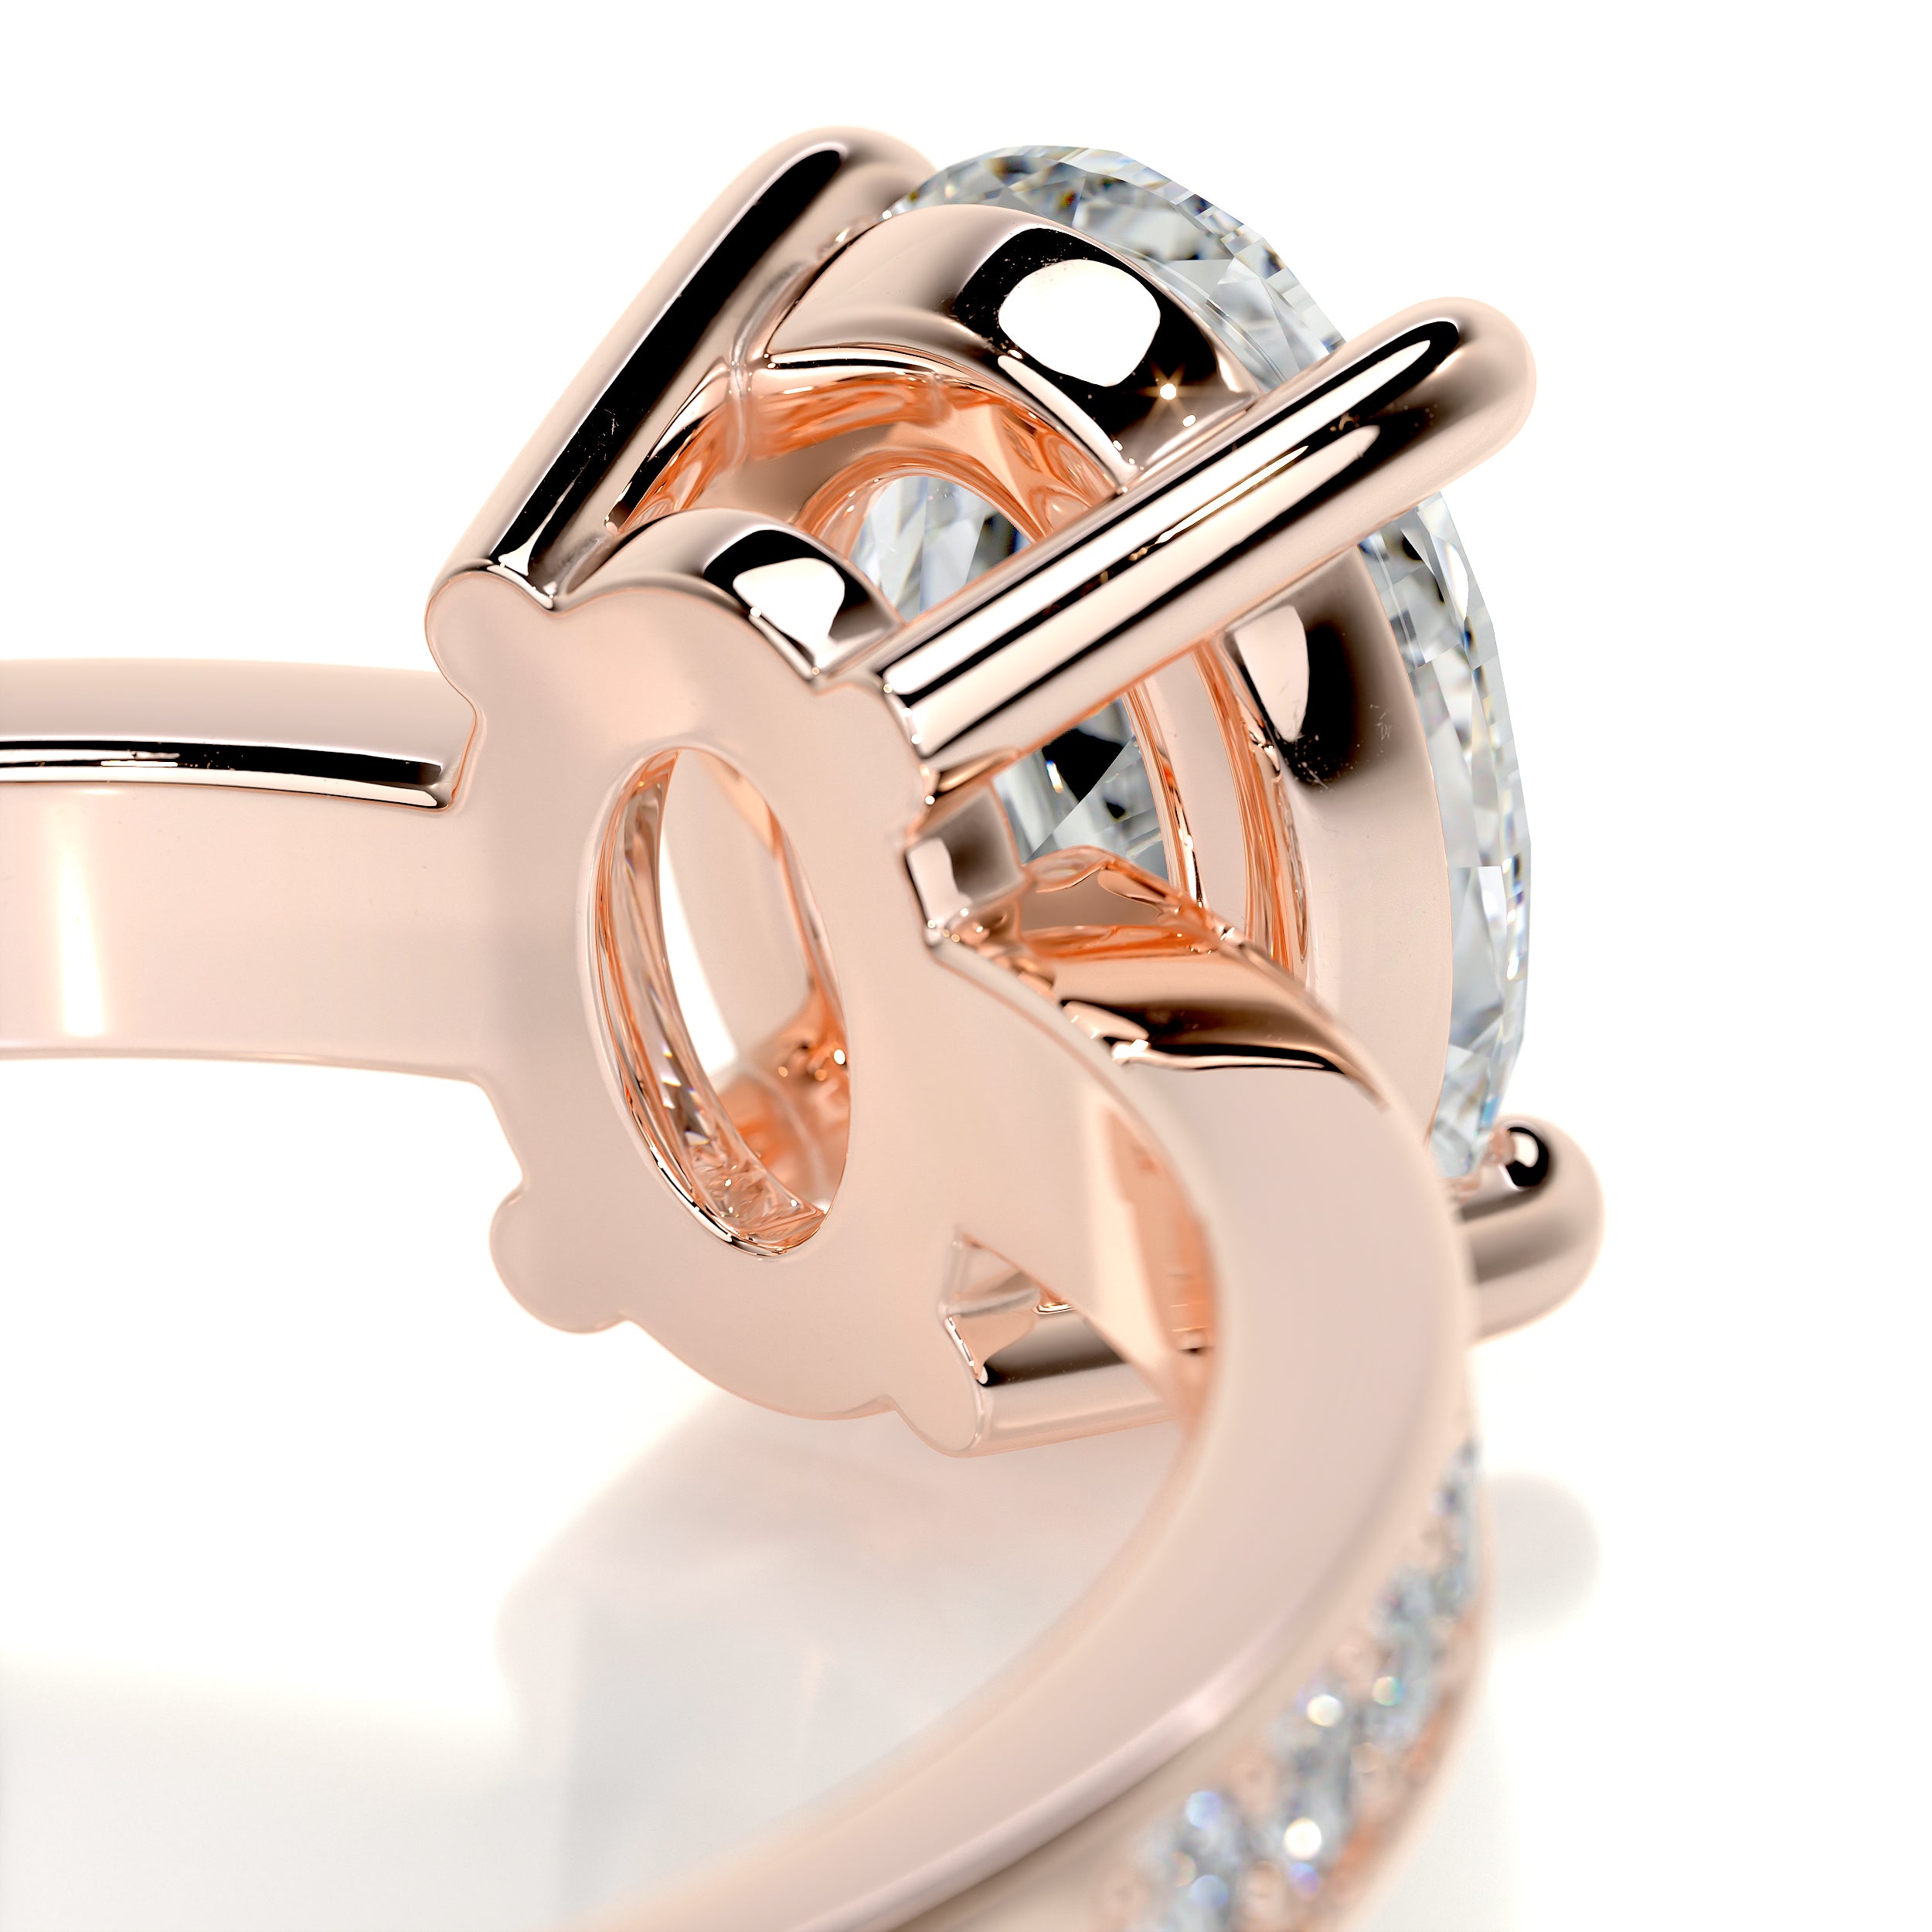 Giselle Diamond Engagement Ring   (1.16 Carat) -14K Rose Gold